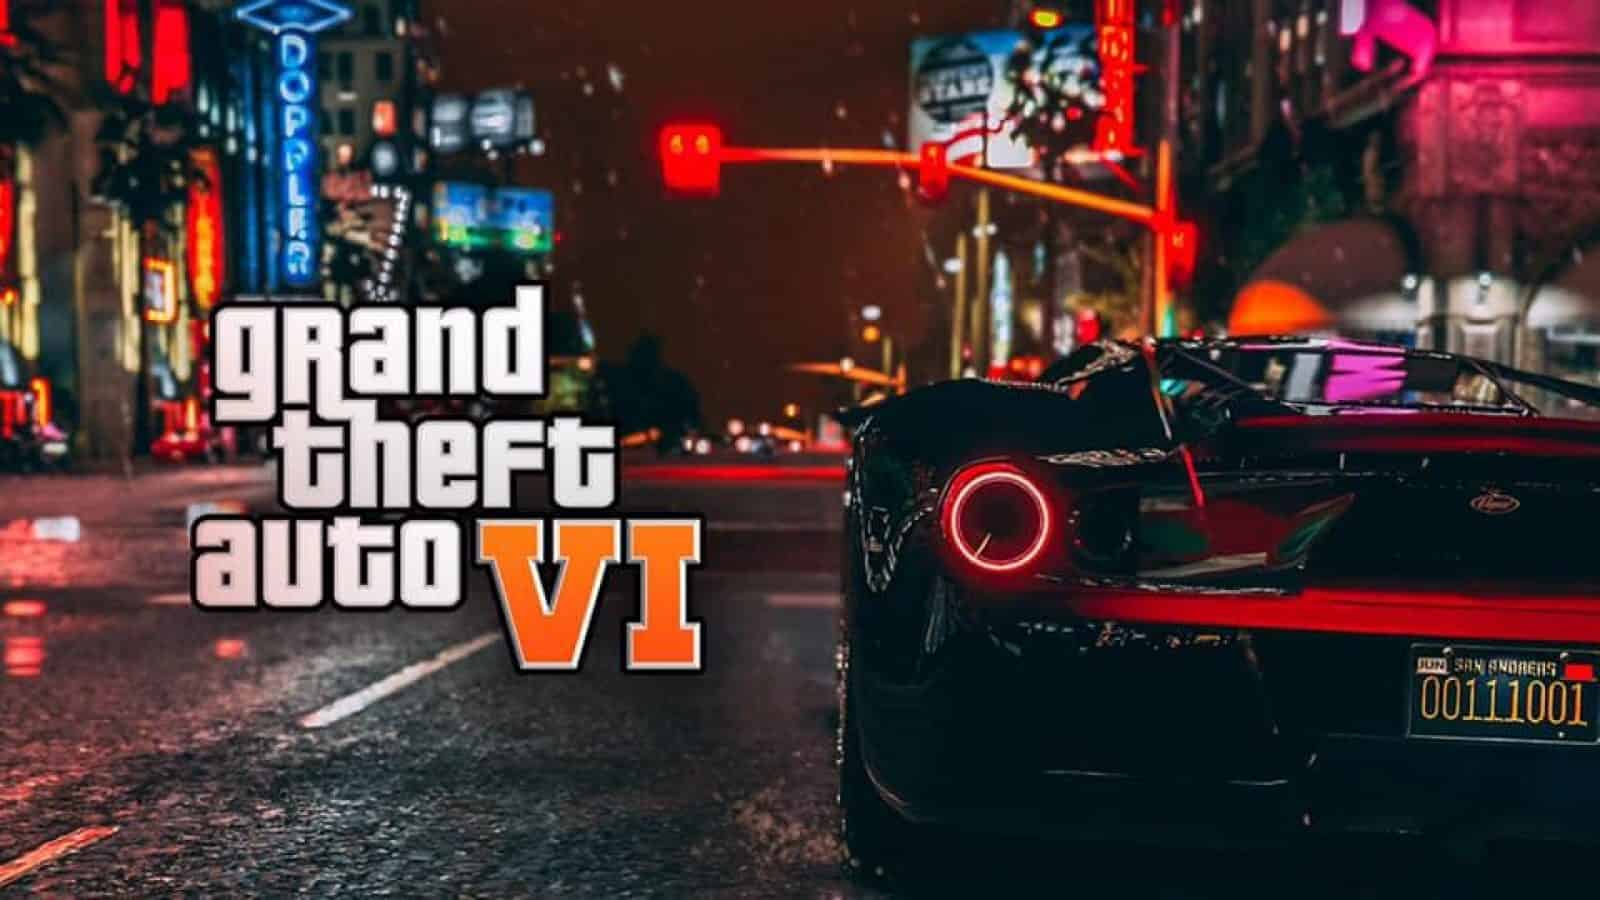 Reddit user leaks Rockstar Games' plans on GTA 6 and Next-Gen